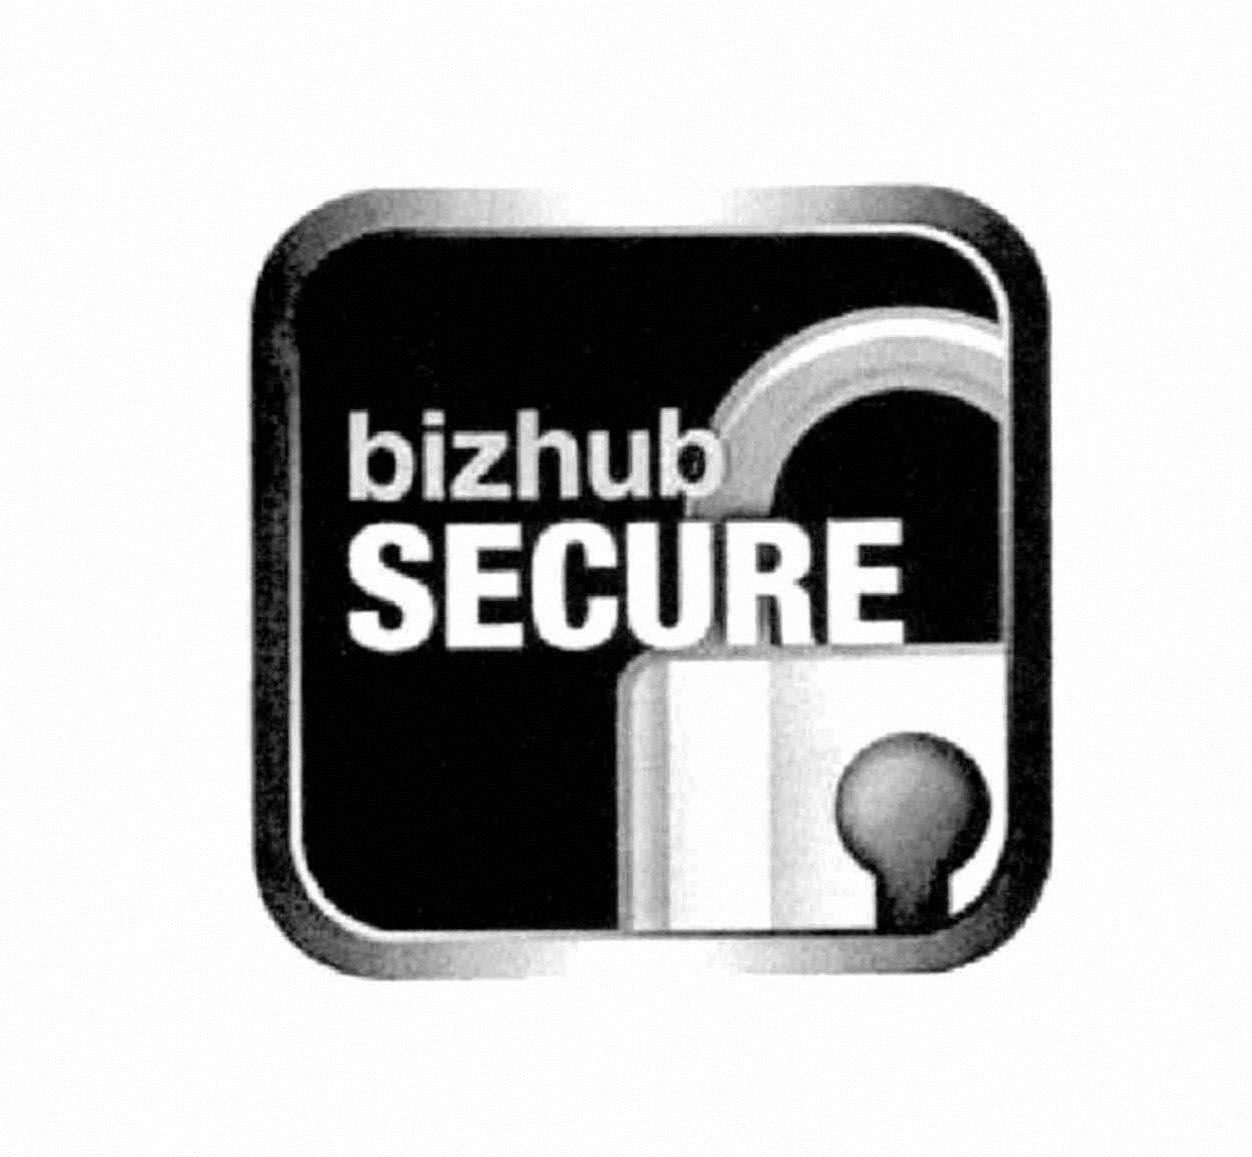  BIZHUB SECURE